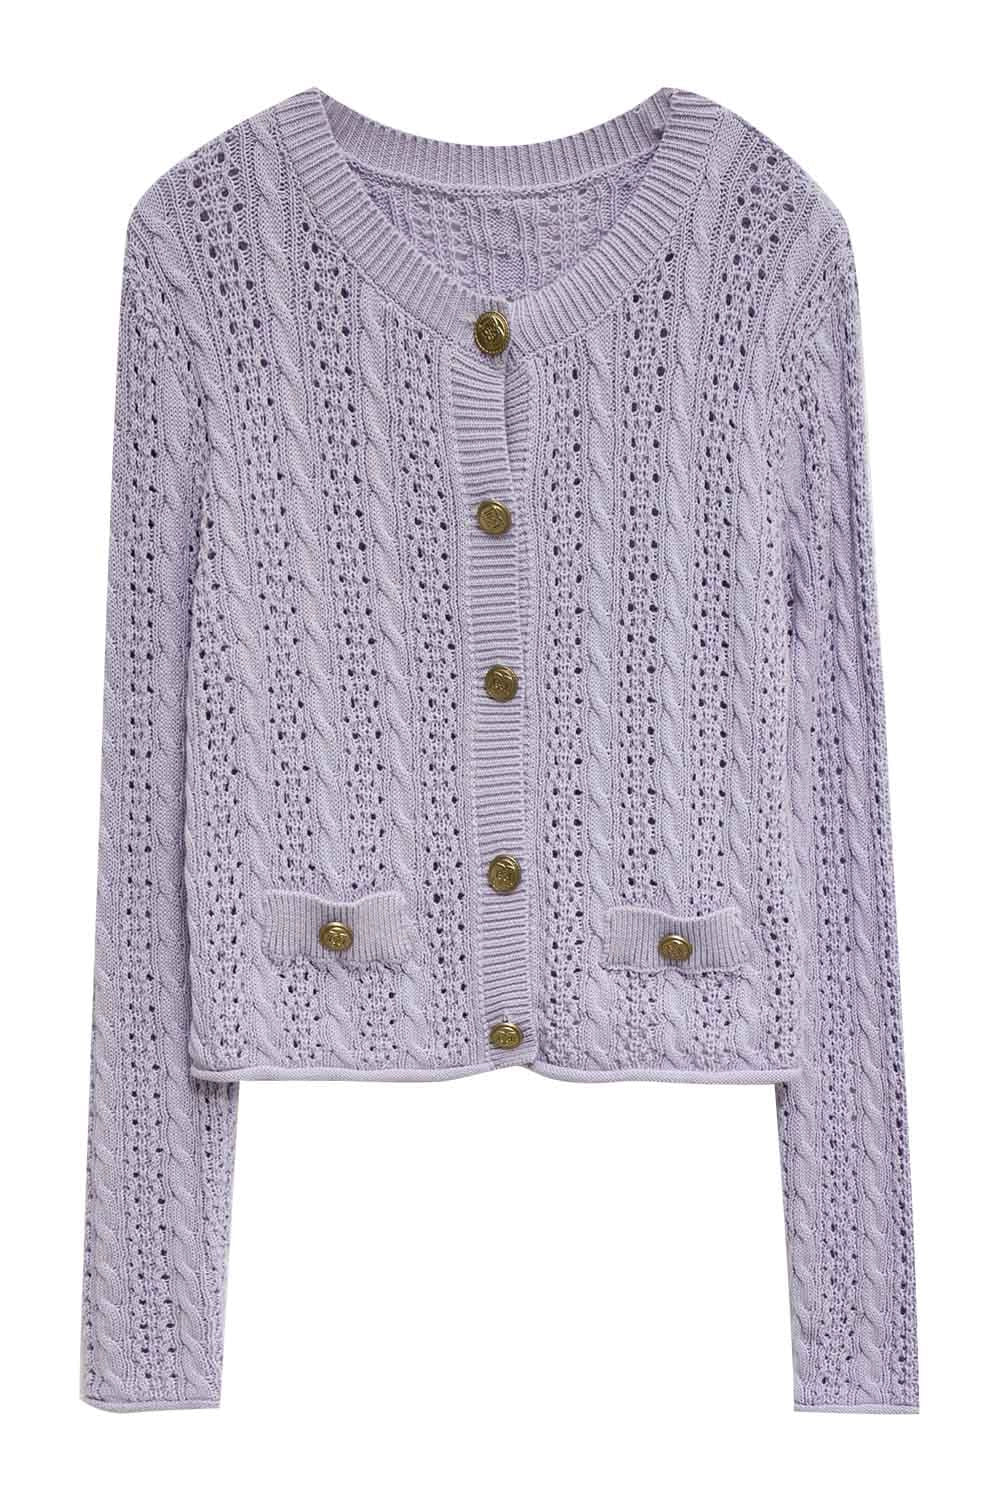 Women's Vintage Knit Cardigan V-Neck Single Breasted Long Sleeve Sweater